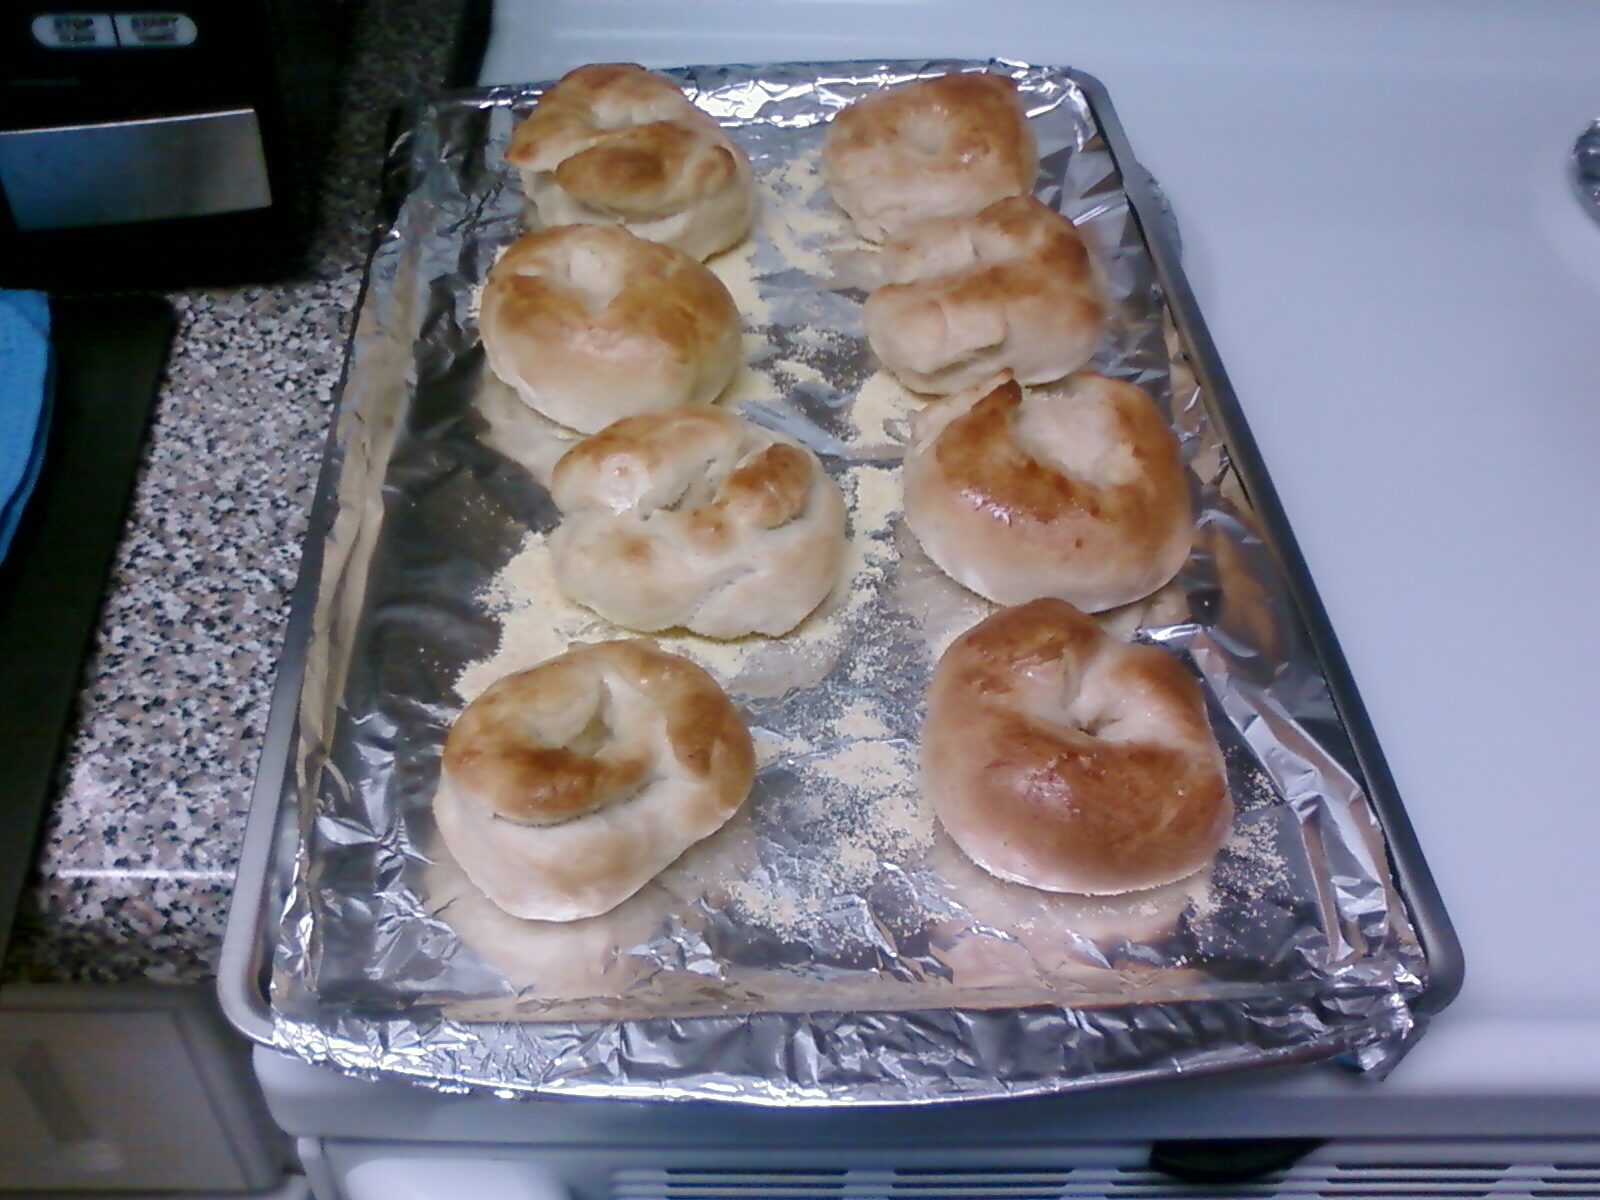 Homemade bagels!